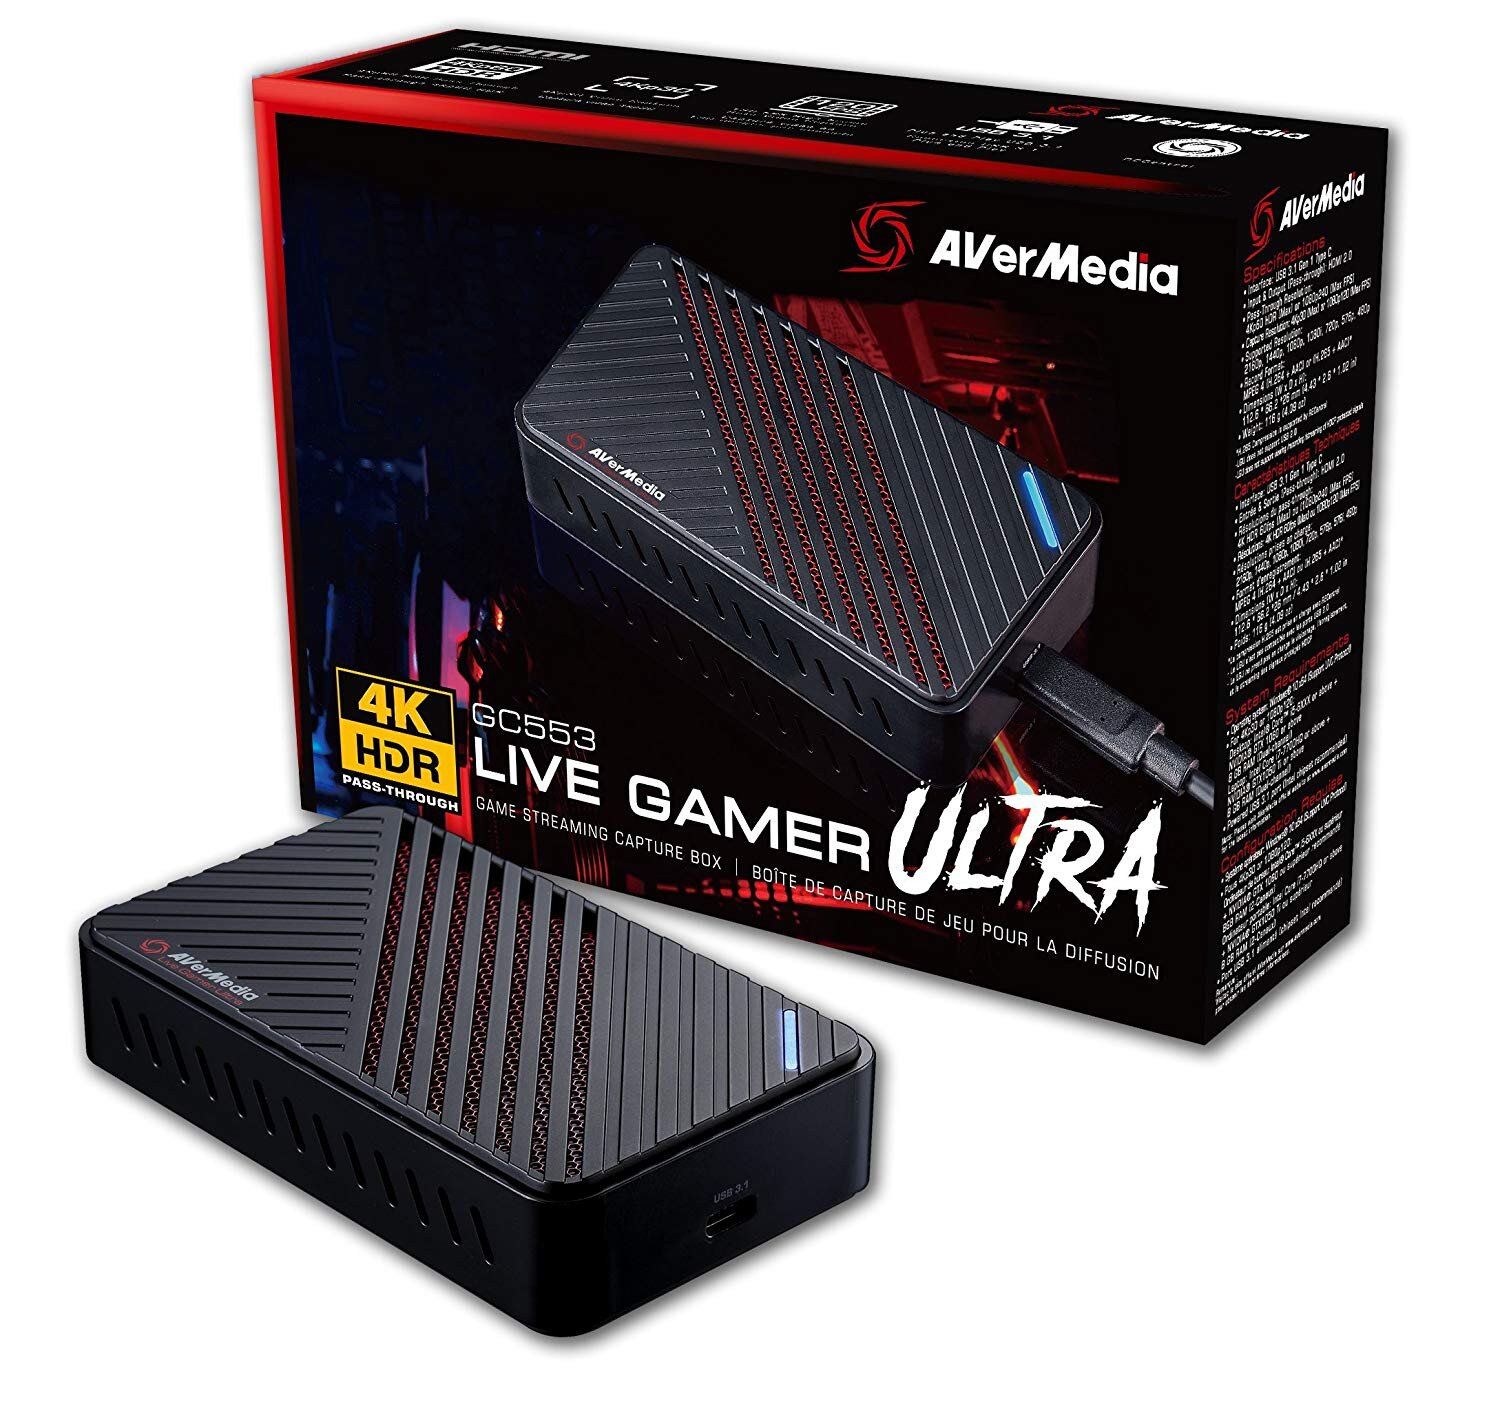 Buy AVerMedia Live Gamer Ultra Capture Device online in Pakistan - Tejar.pk